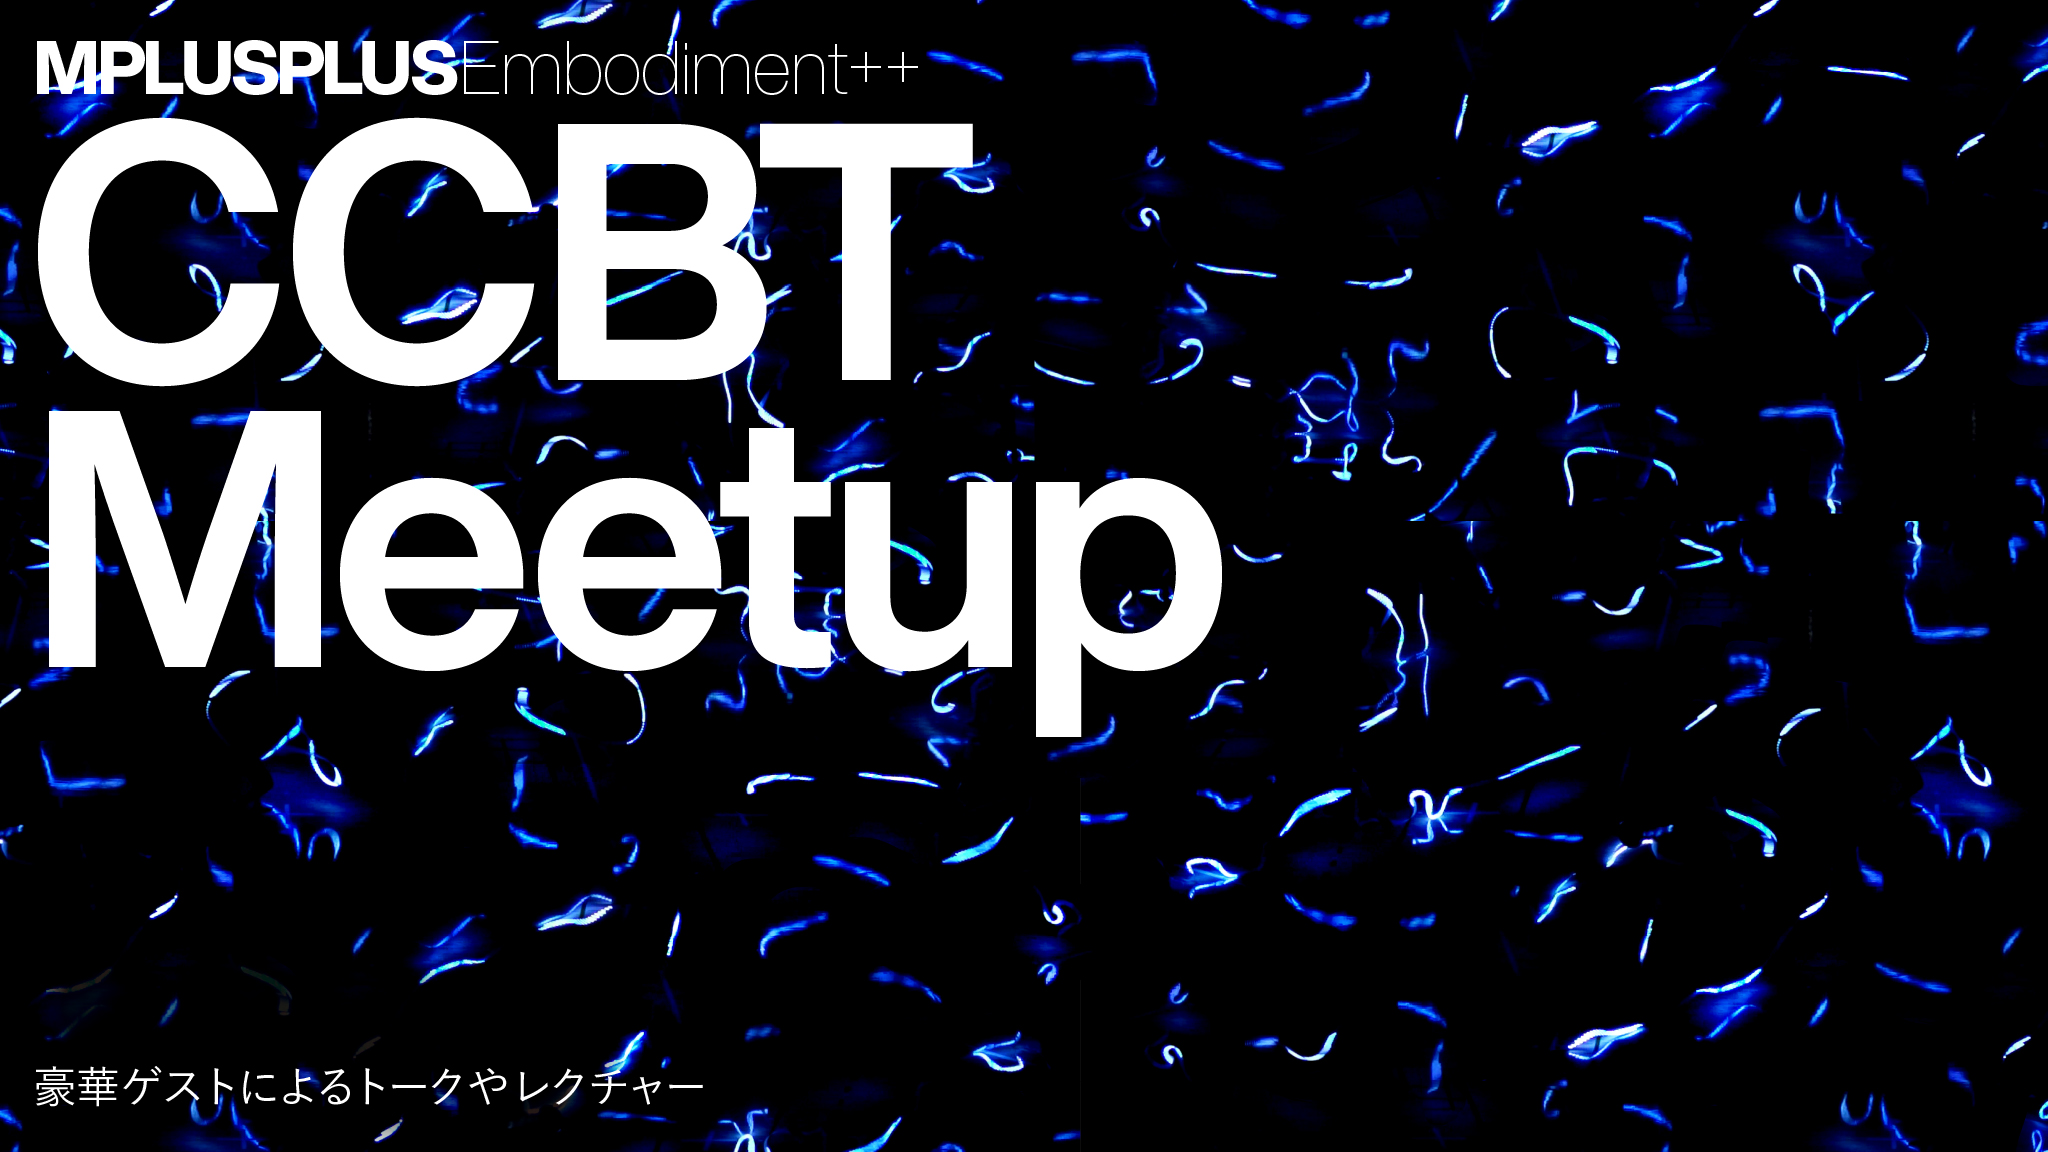 MPLUSPLUS「Embodiment++」関連イベント【CCBT Meetup】